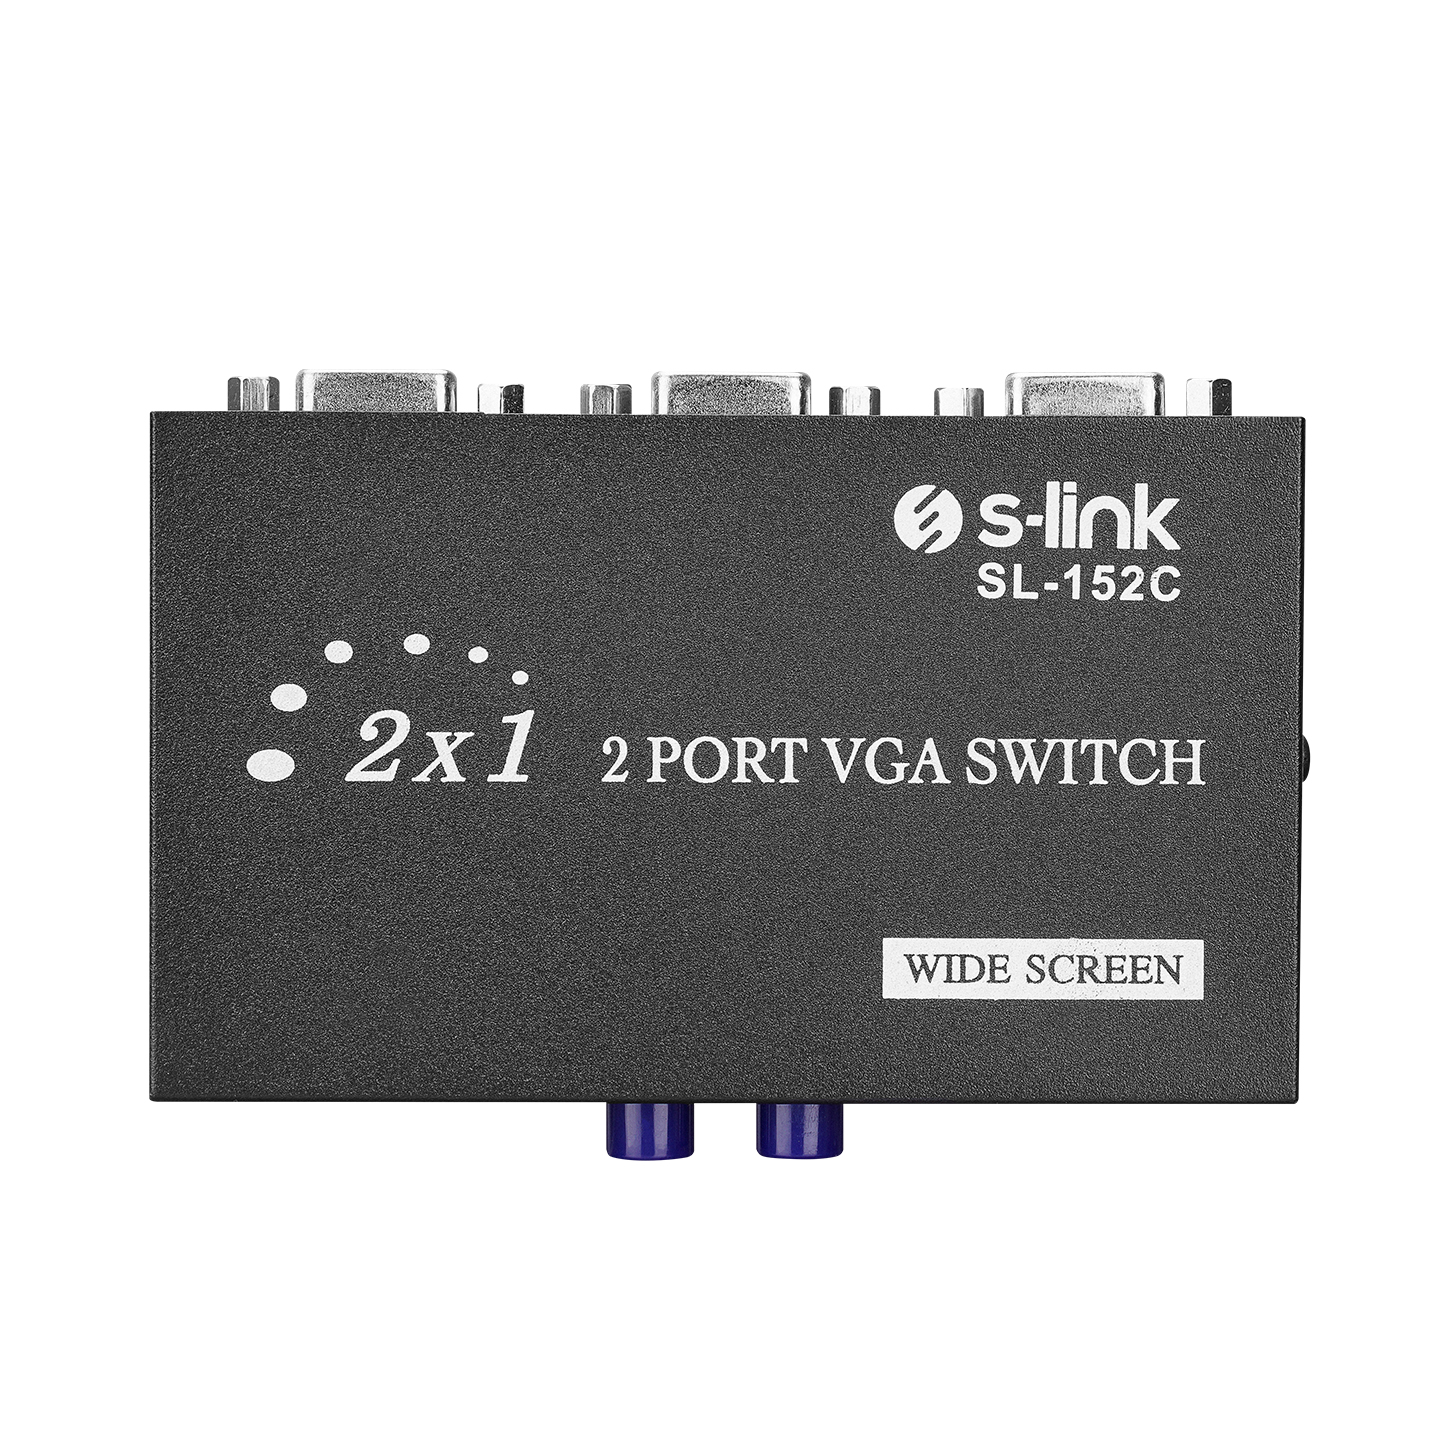 S-link SL-152C 2 Port VGA Switch